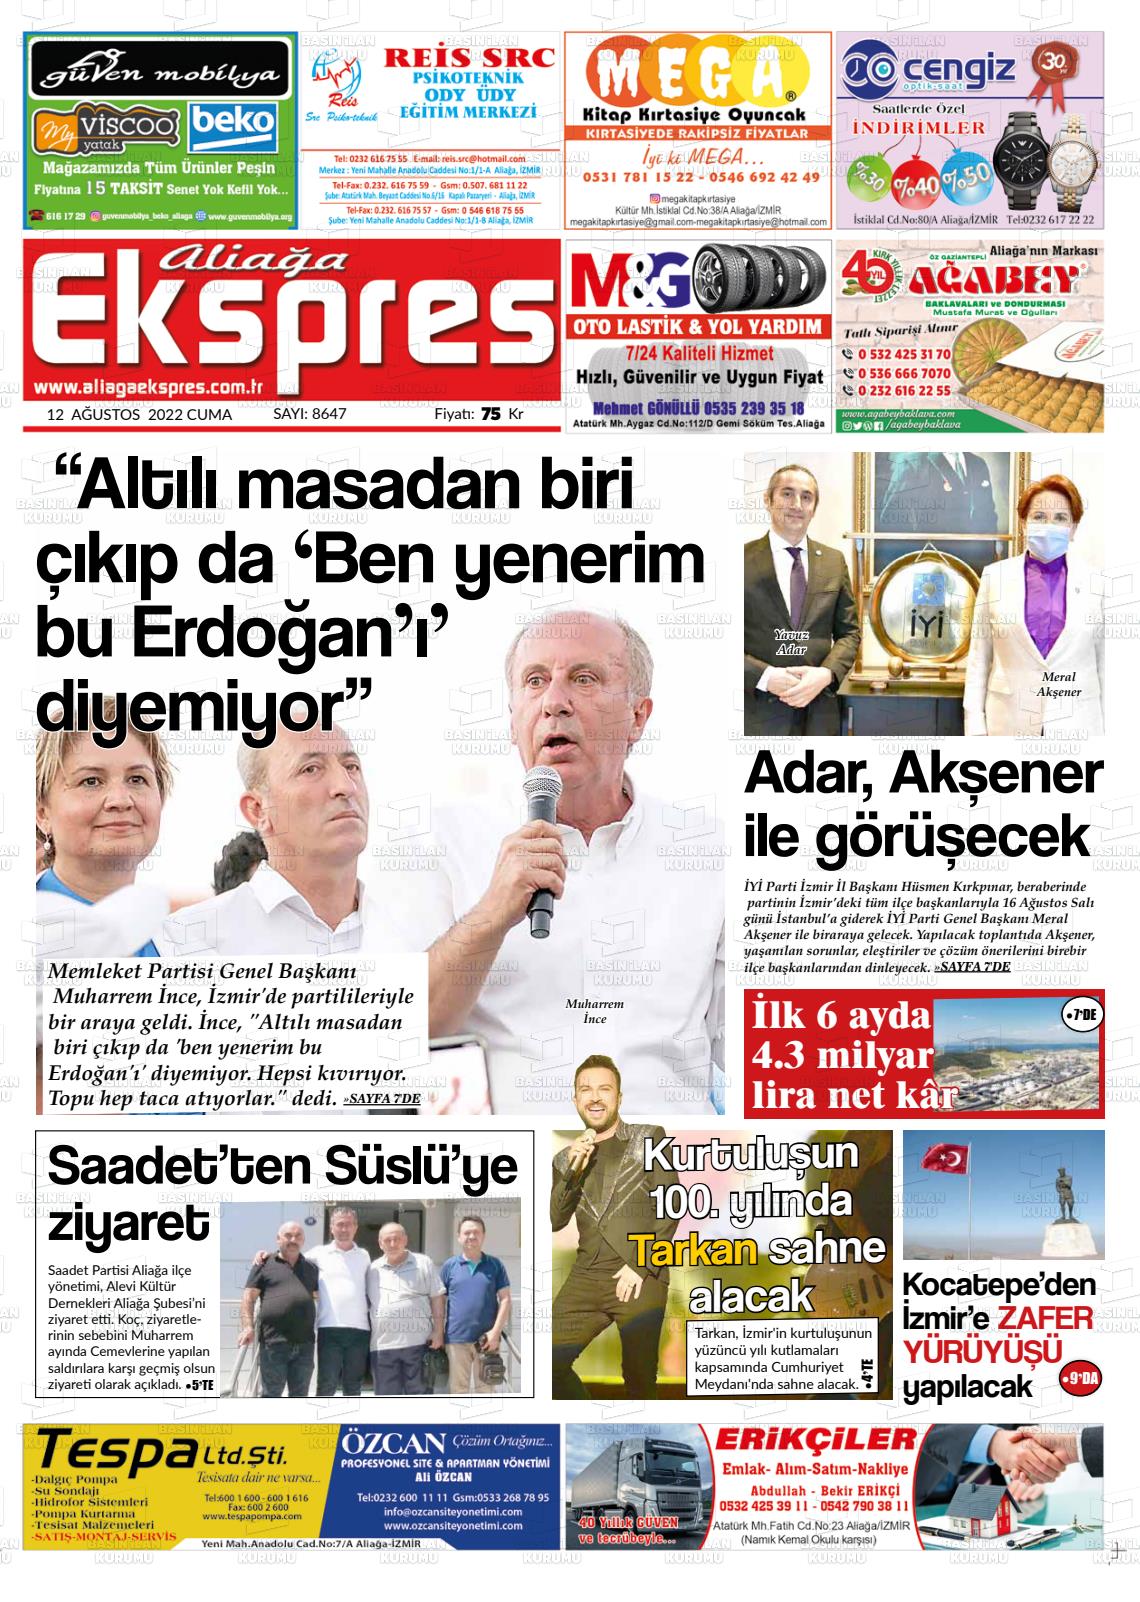 12 Ağustos 2022 Aliağa Ekspres Gazete Manşeti